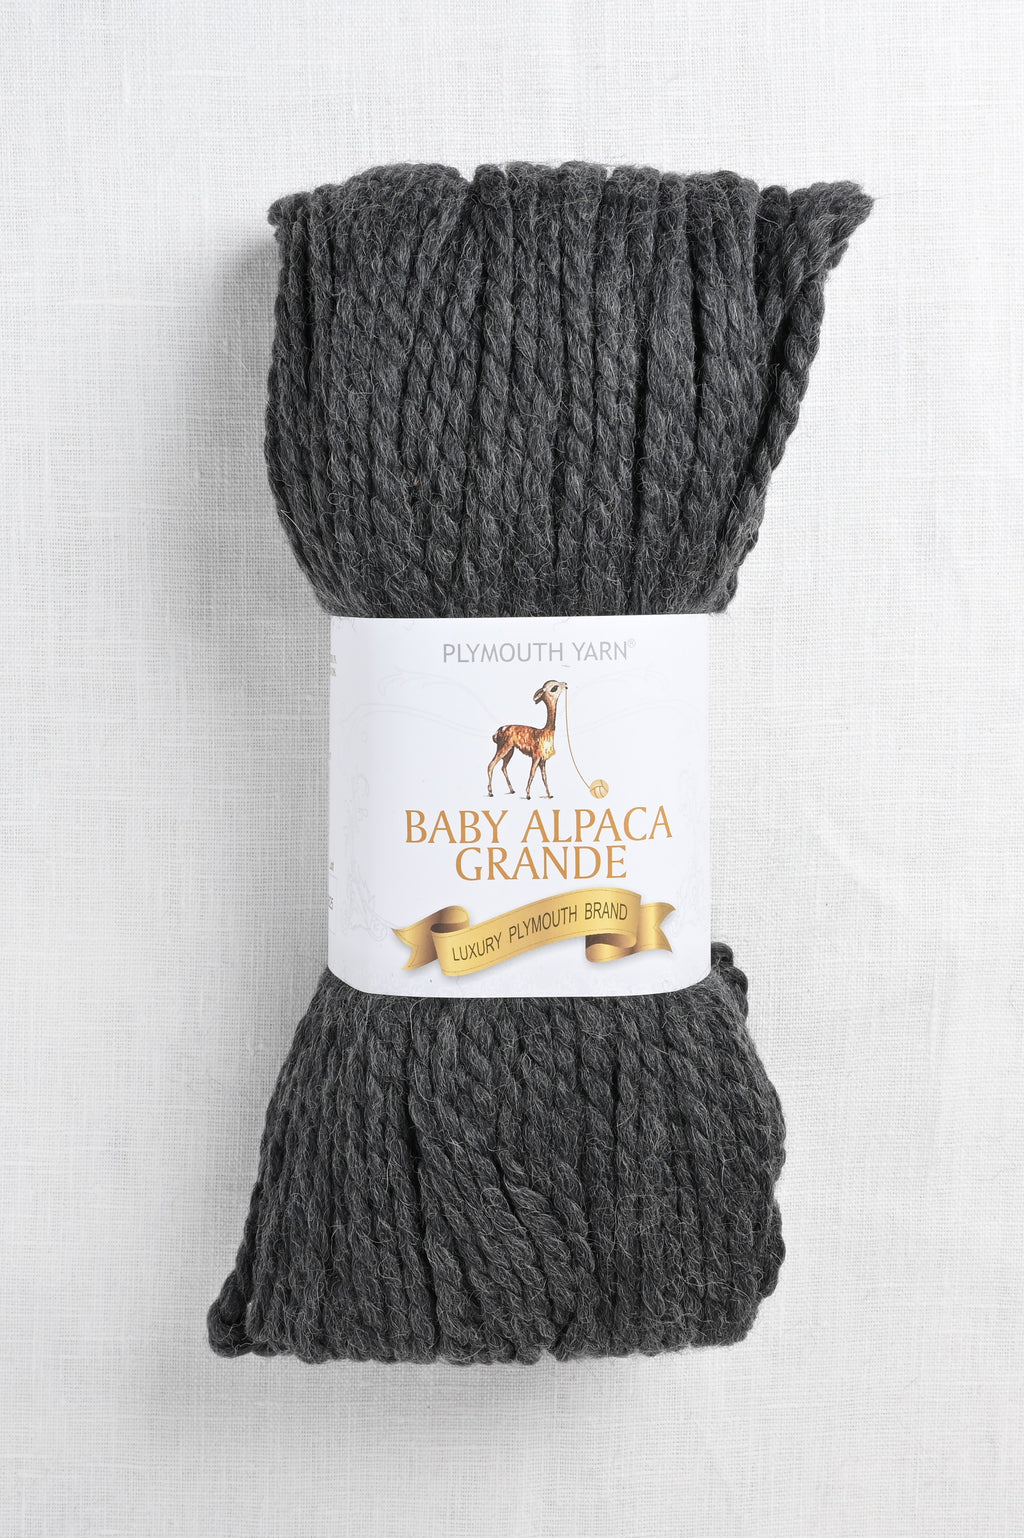 GG's 2-Ply Alpaca Sport Yarn in Light Brown